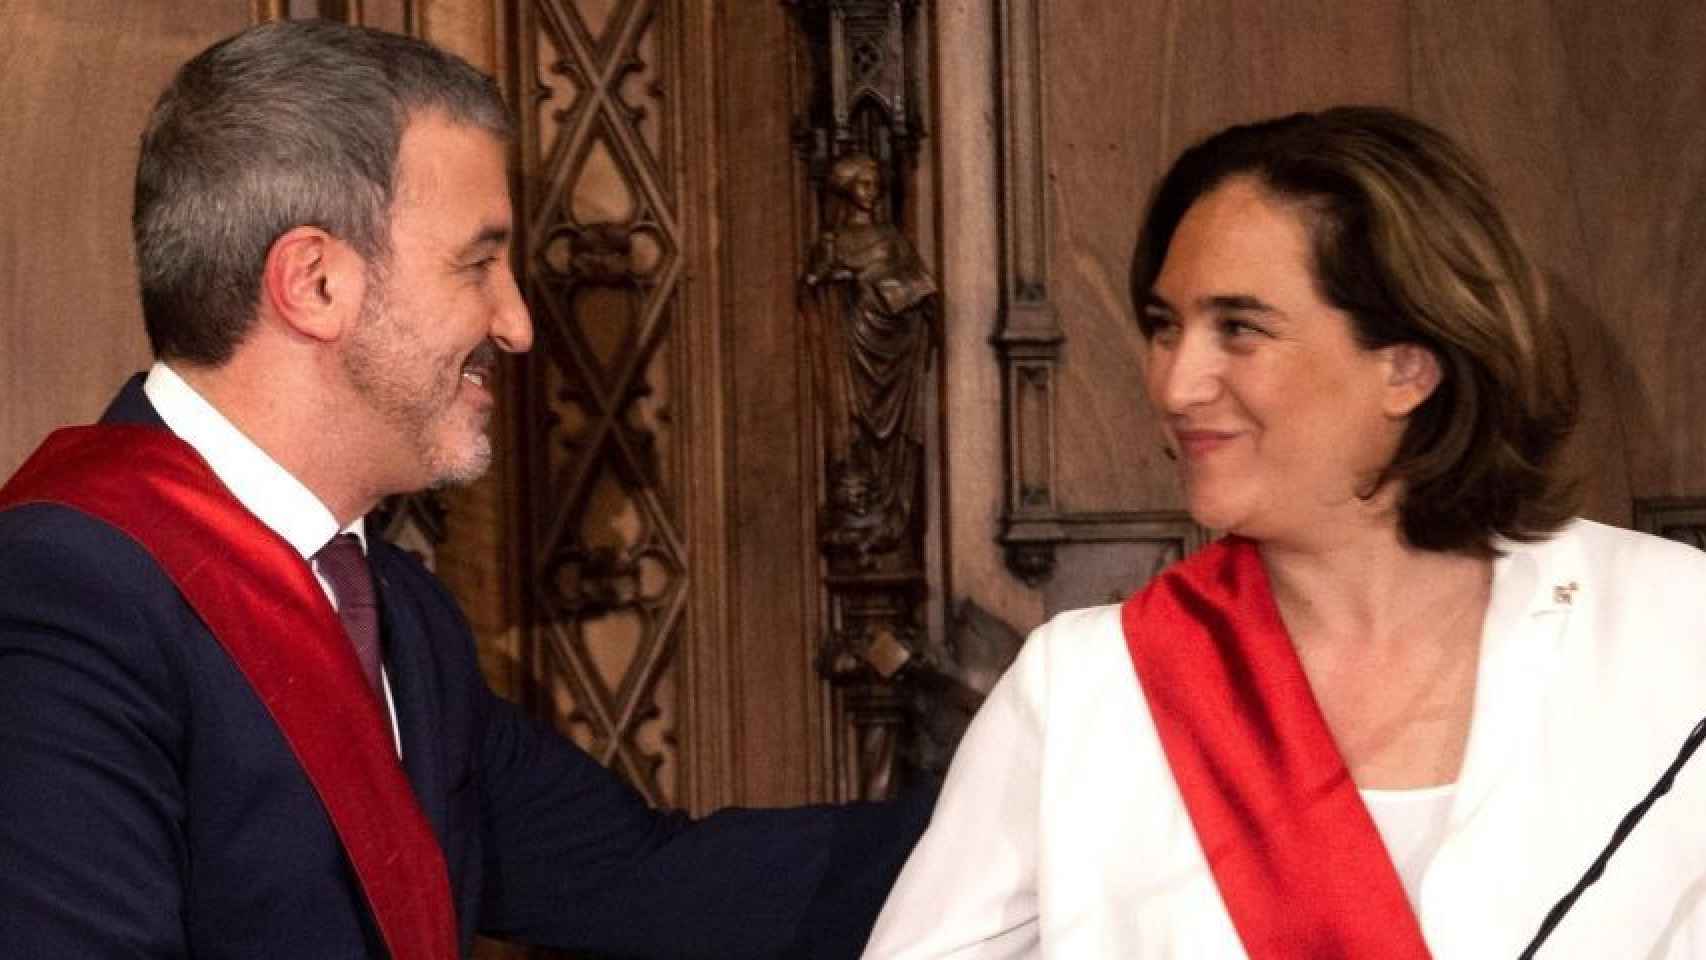 Jaume Collboni saluda a Ada Colau tras ser investida como alcaldesa de Barcelona / EFE